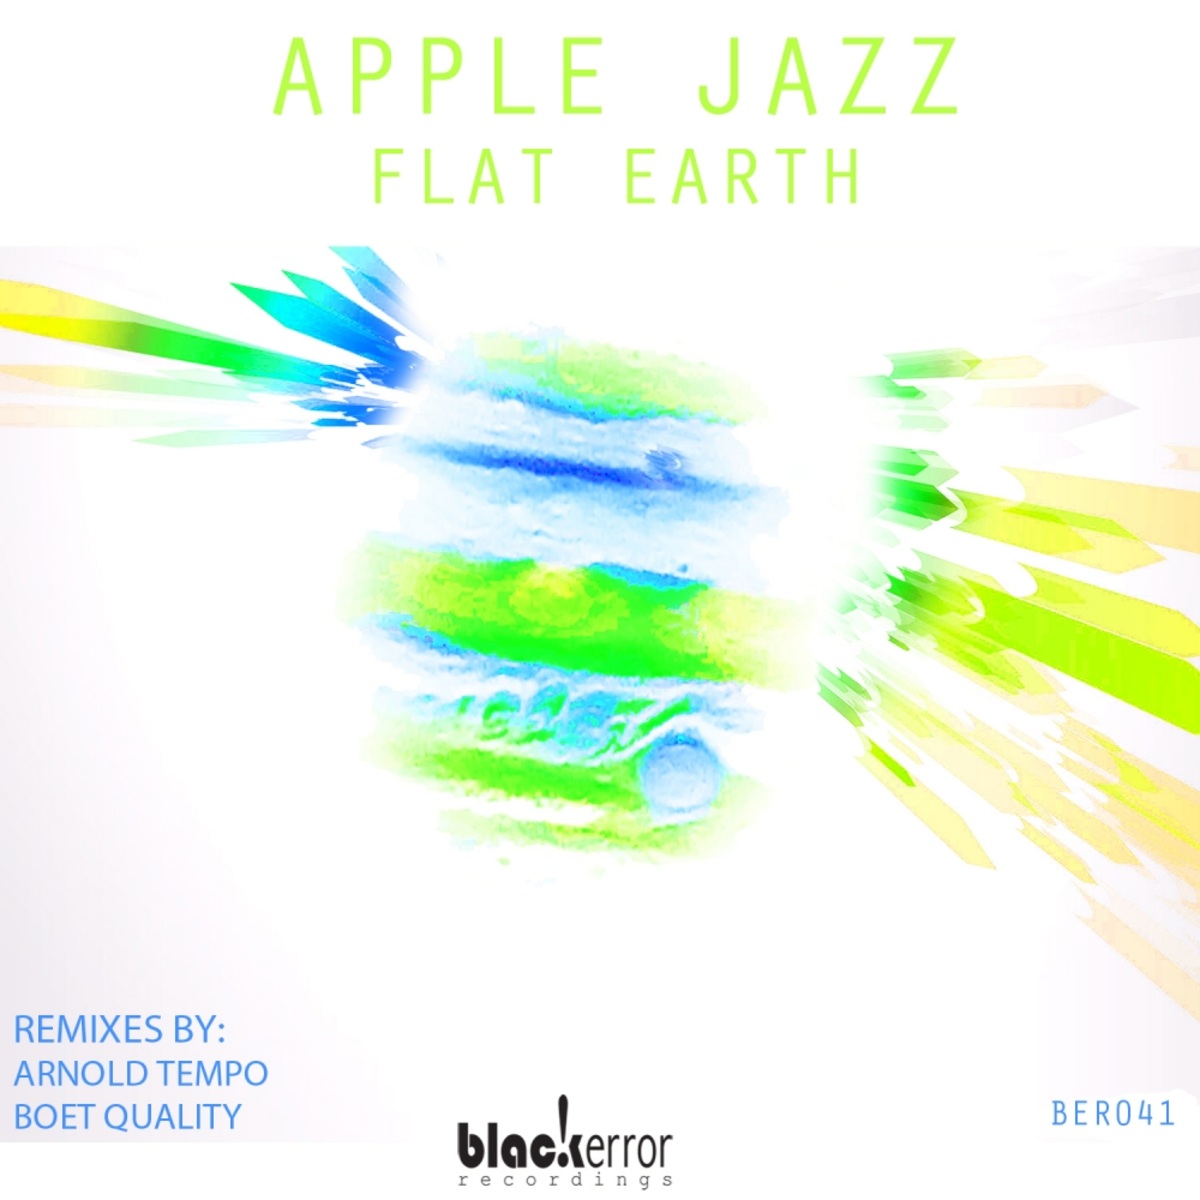 Apple Jazz - Flat Earth / Black Error Recordings